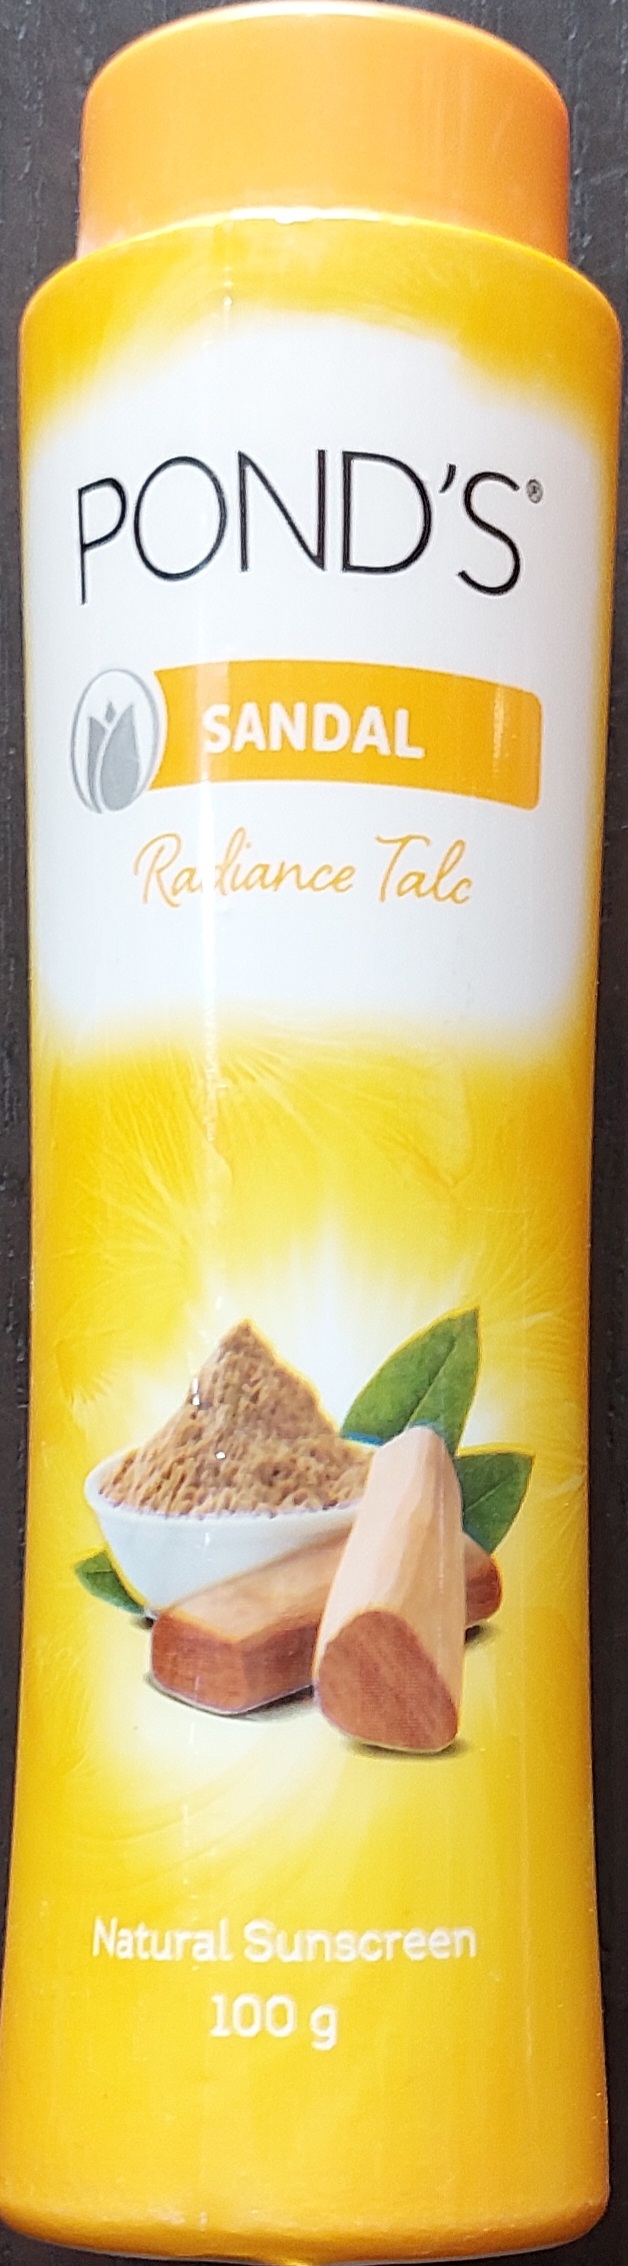 POND'S - Sandal - Radiance Talcum Powder - Natural Sunscreen - 100g | Lazada